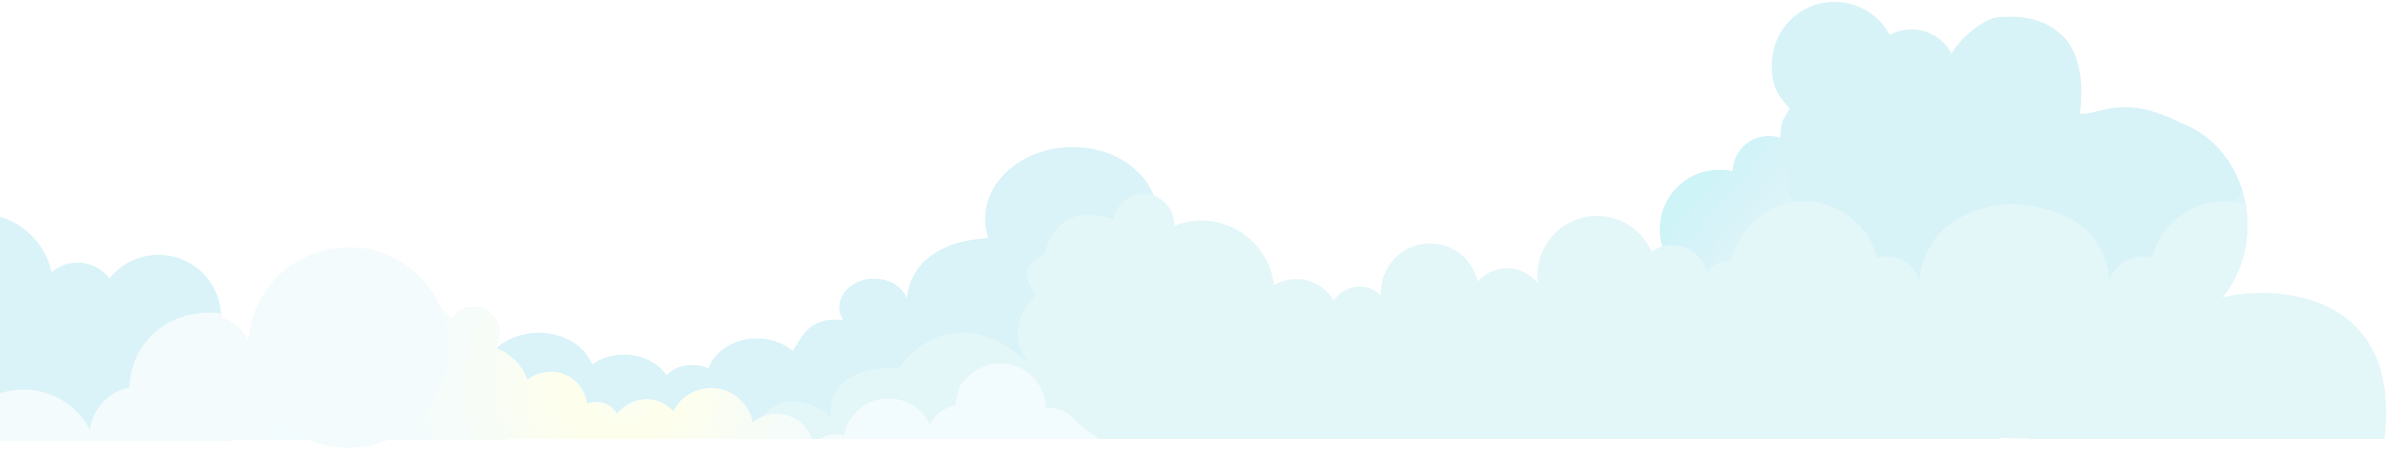 Много облачков